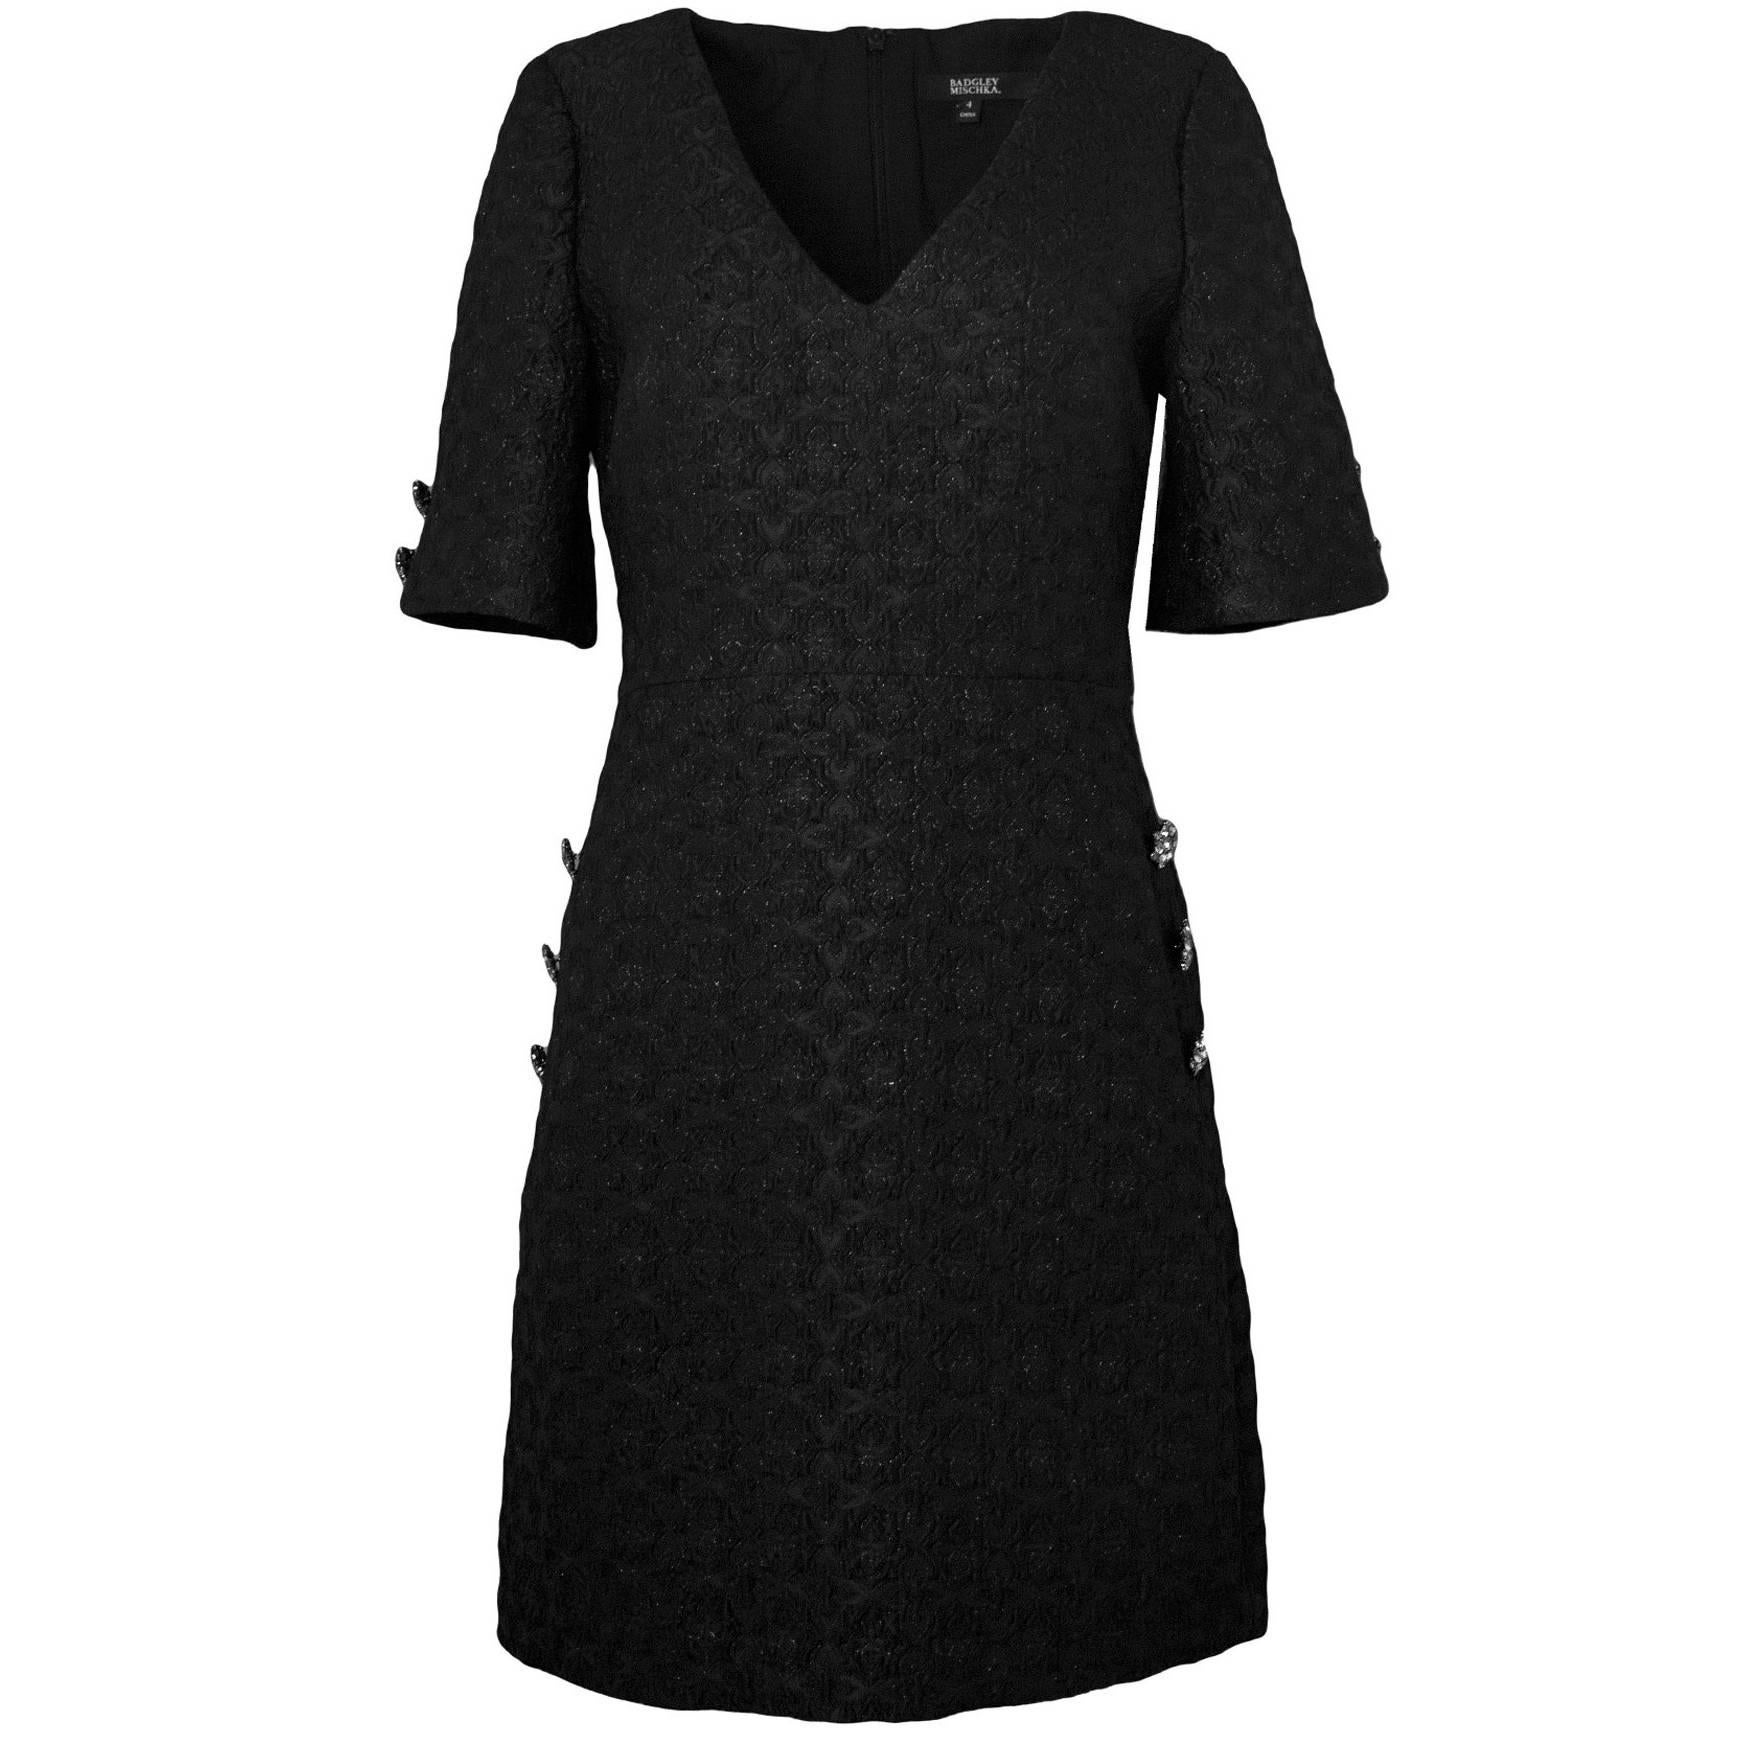 Badgley Mischka Black Brocade Dress with Crystal Buttons Sz 4 NWT